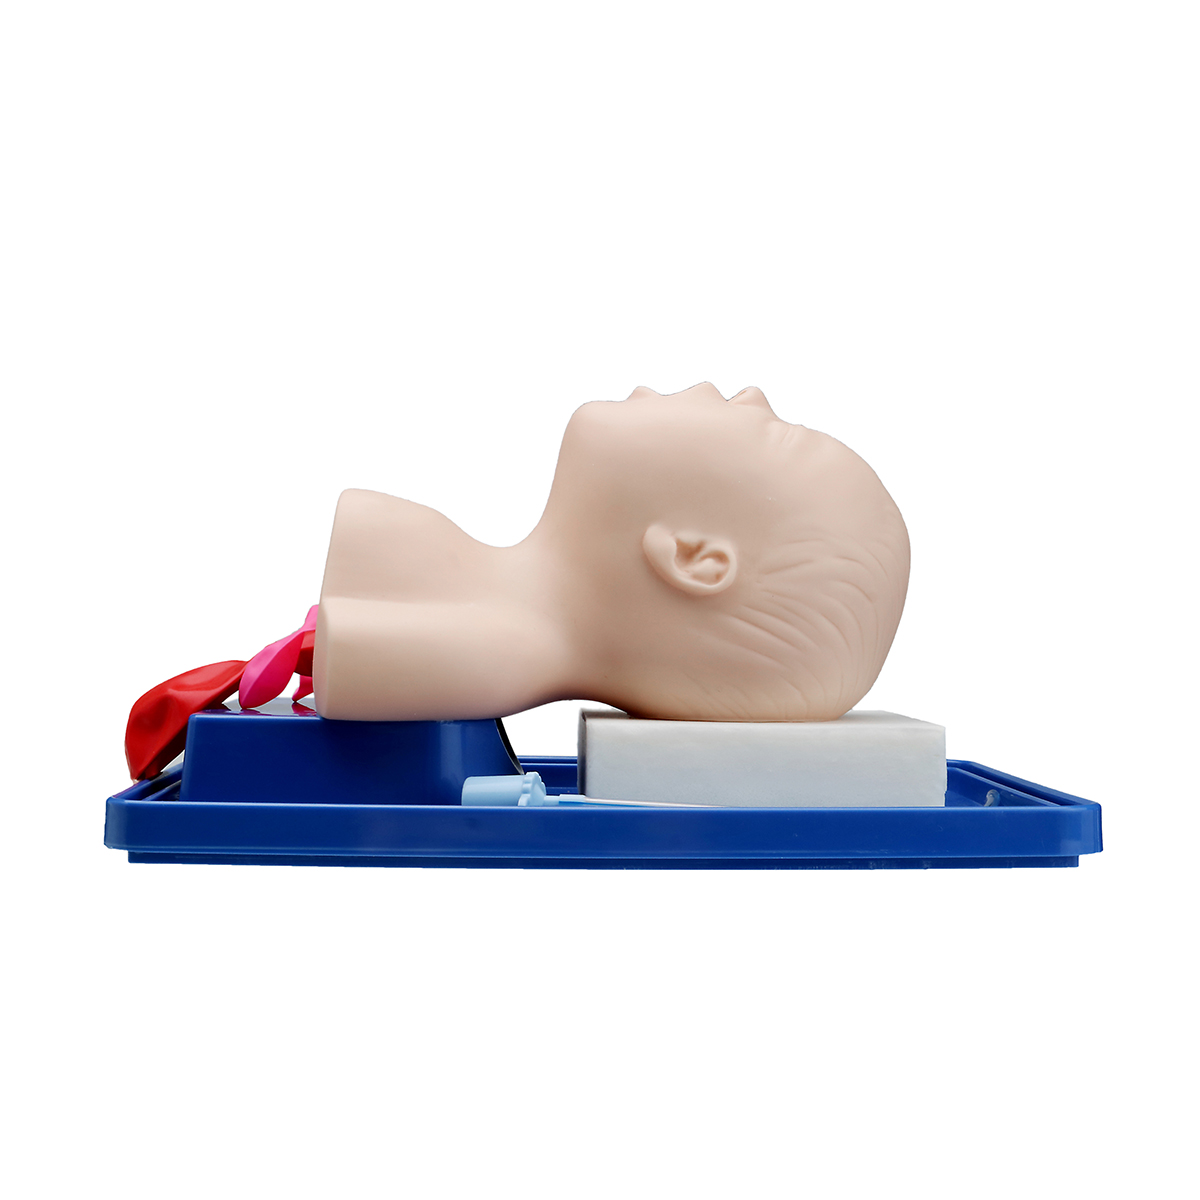 Intubation Manikin Study Teaching Model Baby Infant Airway Management Trainer Medical Model 69